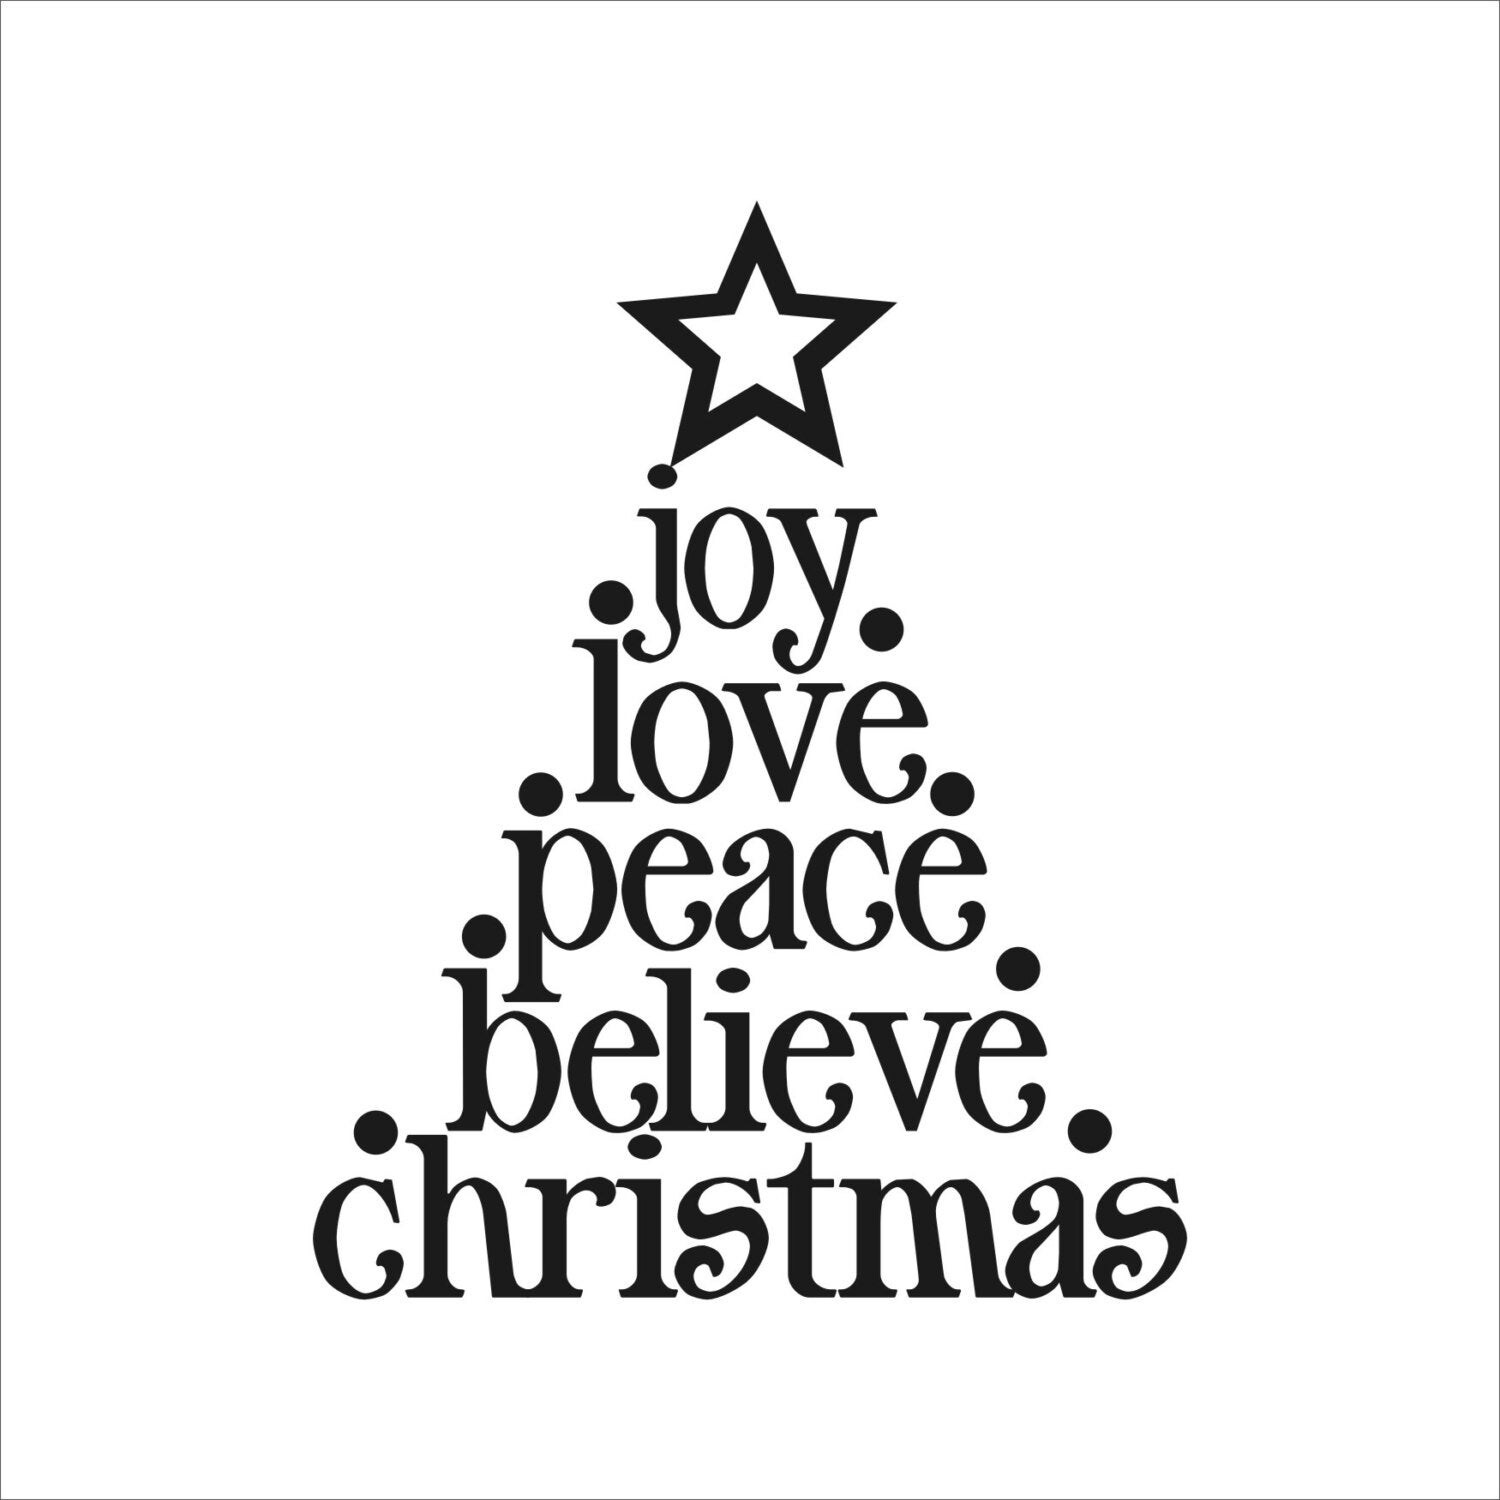 Joy Love Peace believe Christmas Tree decal